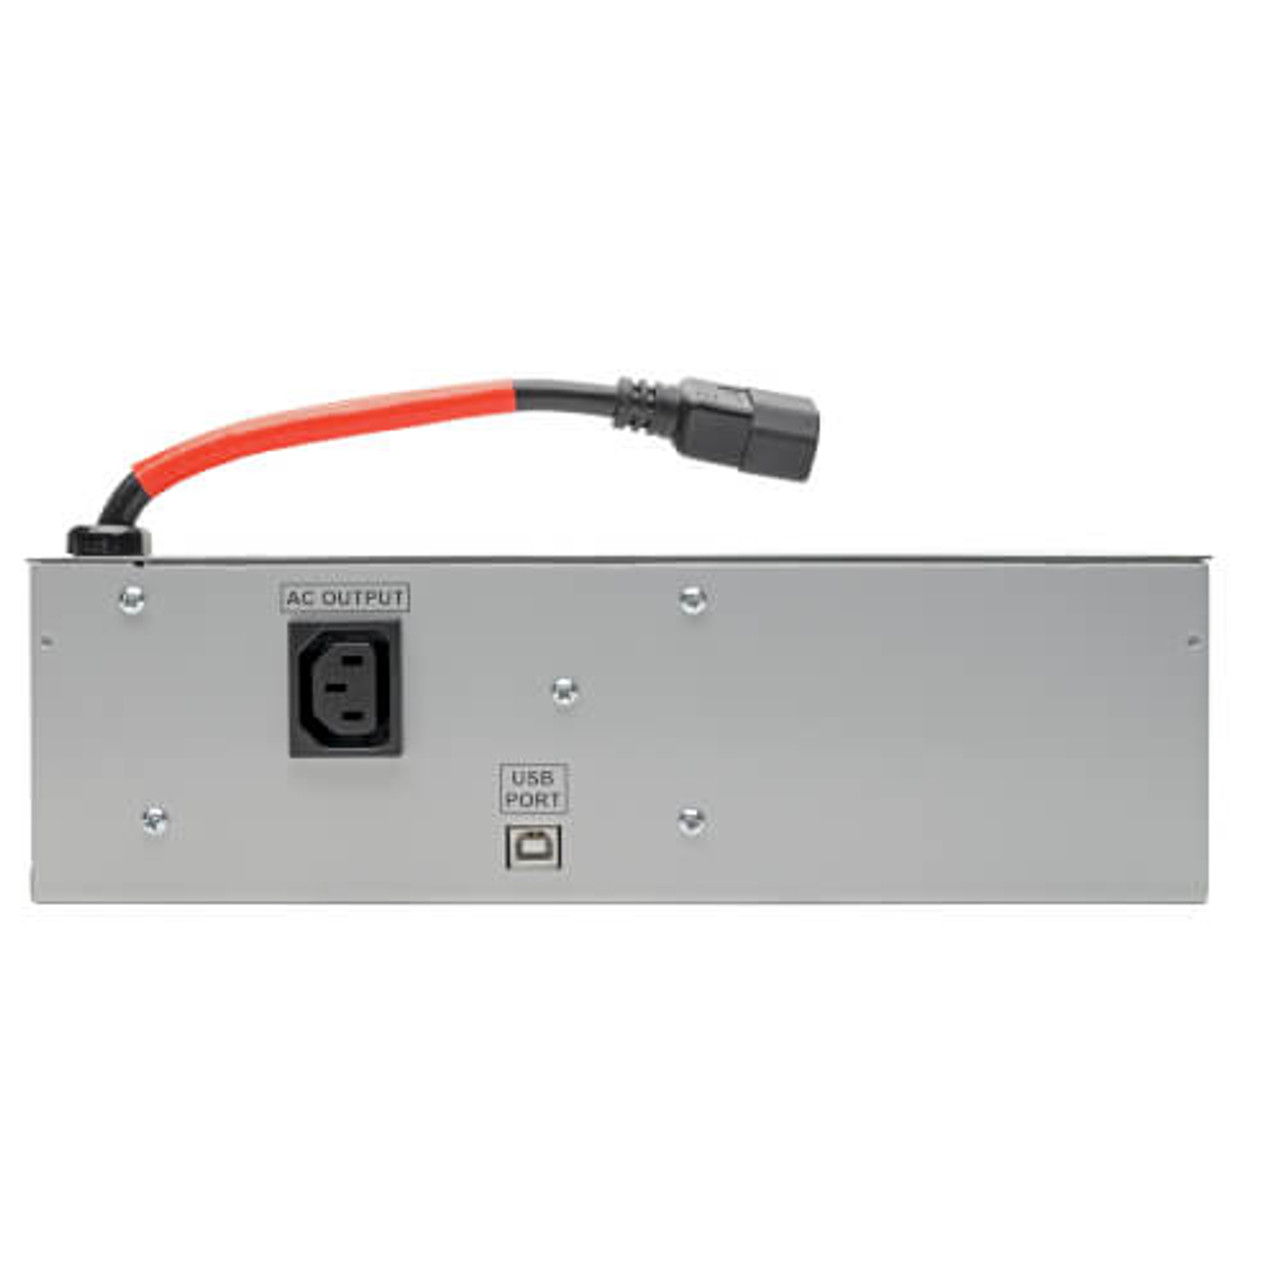 Tripp Lite 350W Power Inverter/Charger for Mobile Medical Equipment, 230V - IEC 60601-1 - HCINT350SNR